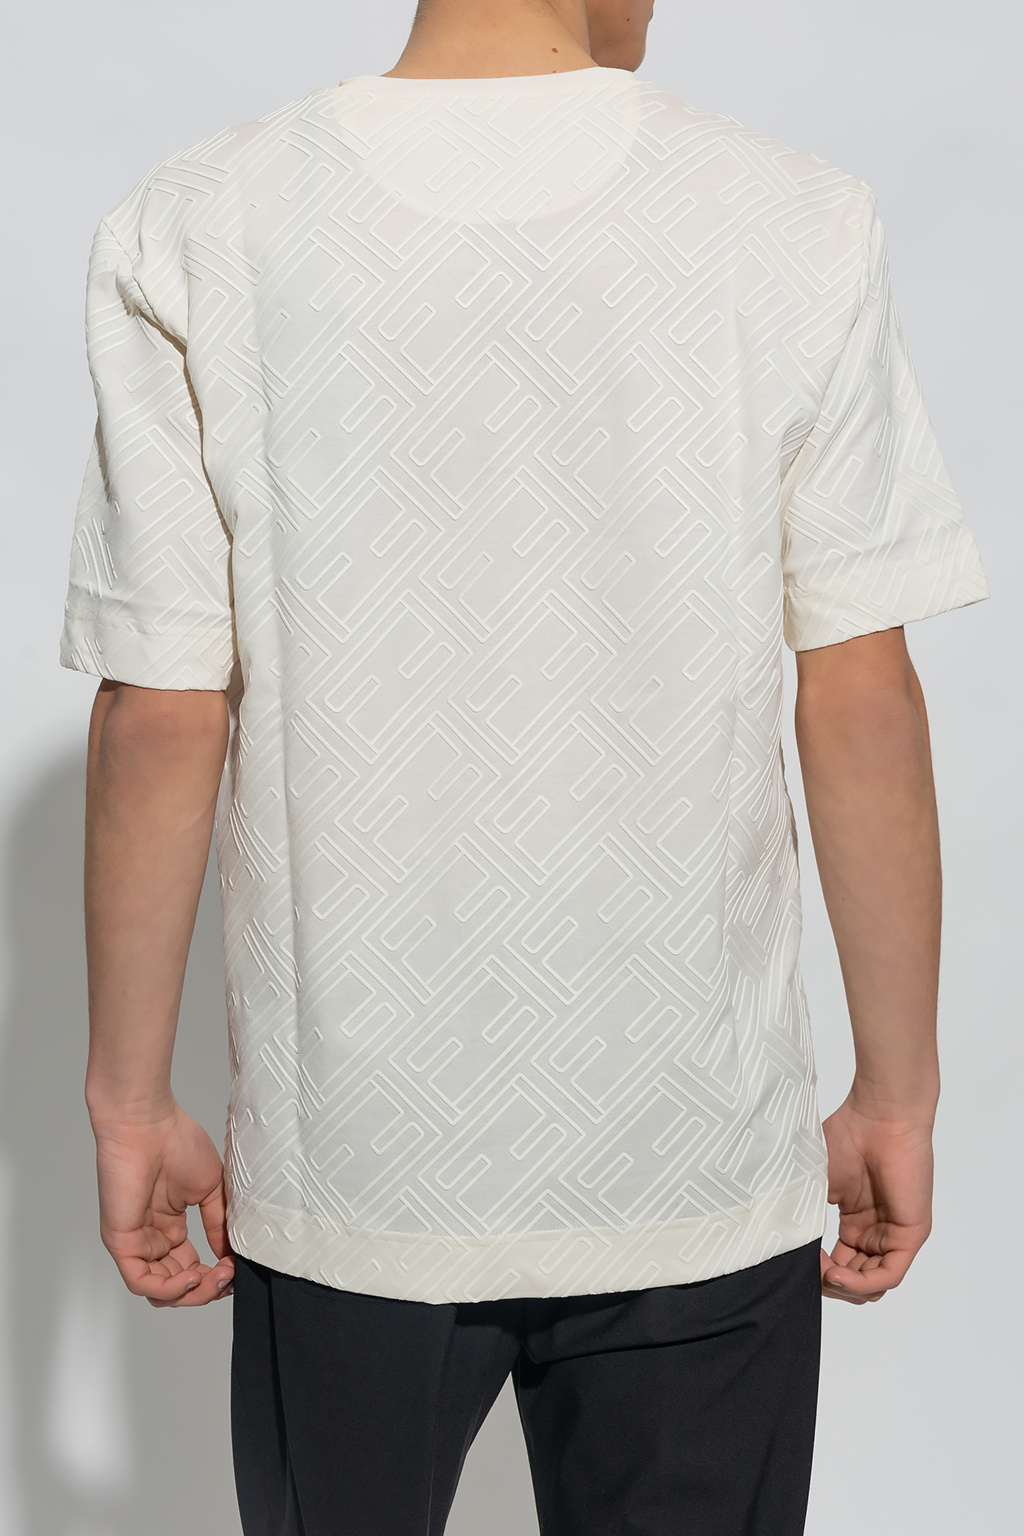 Louis Vuitton Mixed monogram t-shirt - Vitkac shop online